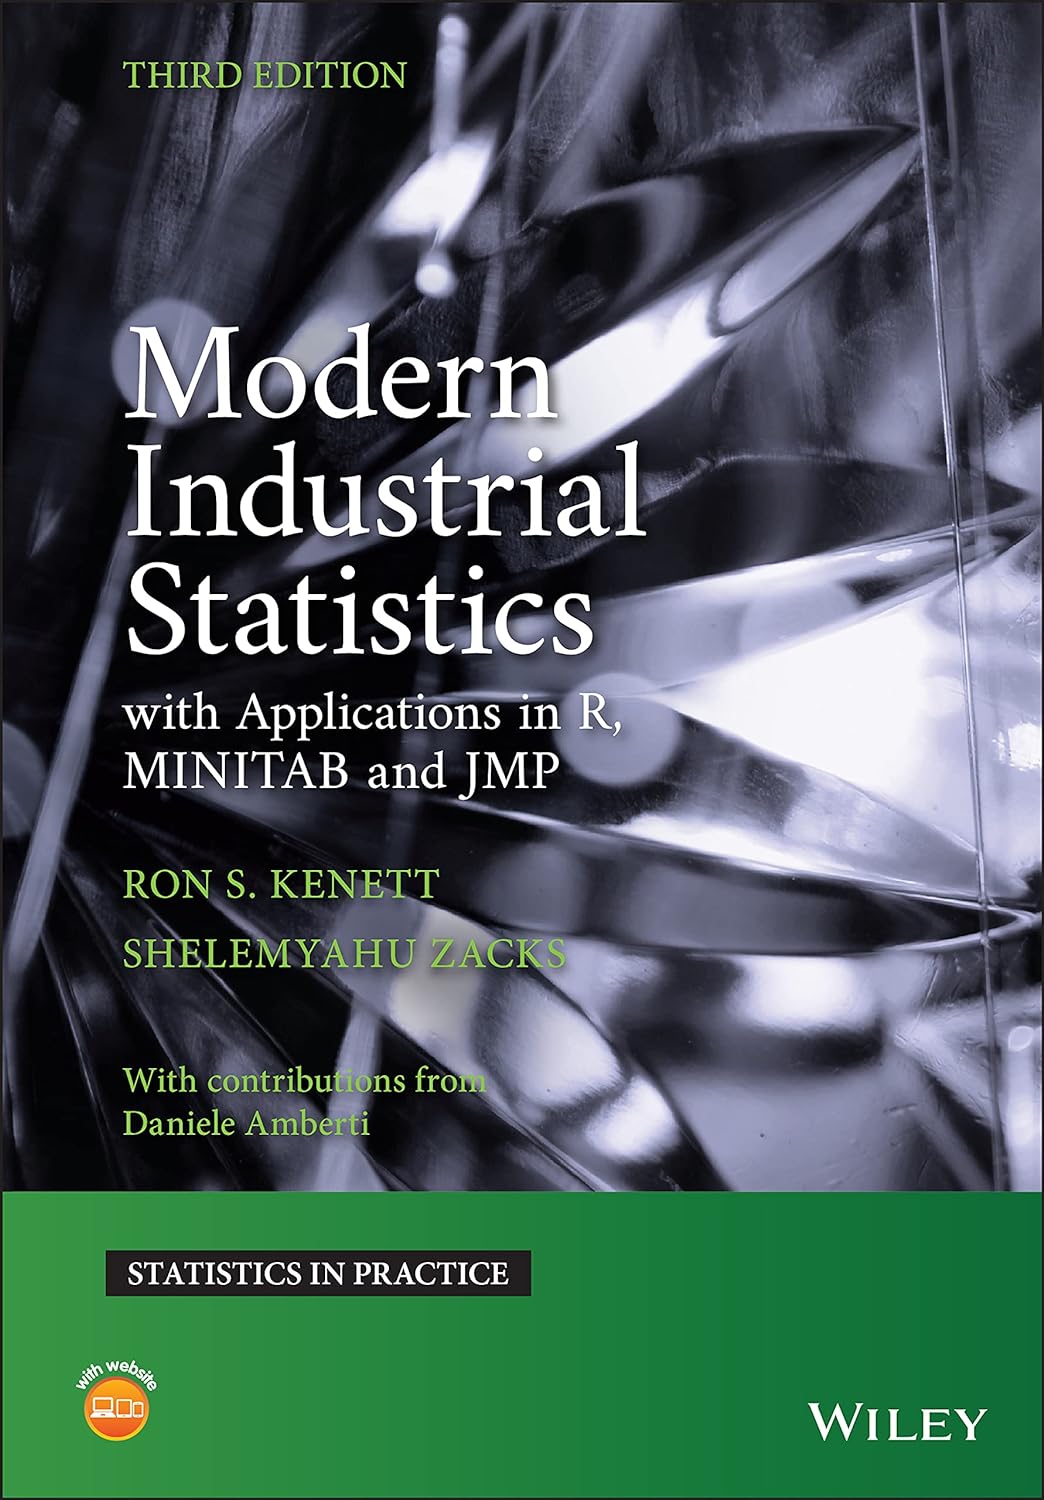 (EBook PDF)Modern Industrial Statistics: With Applications in R, MINITAB, and JMP by Ron S. Kenett, Shelemyahu Zacks